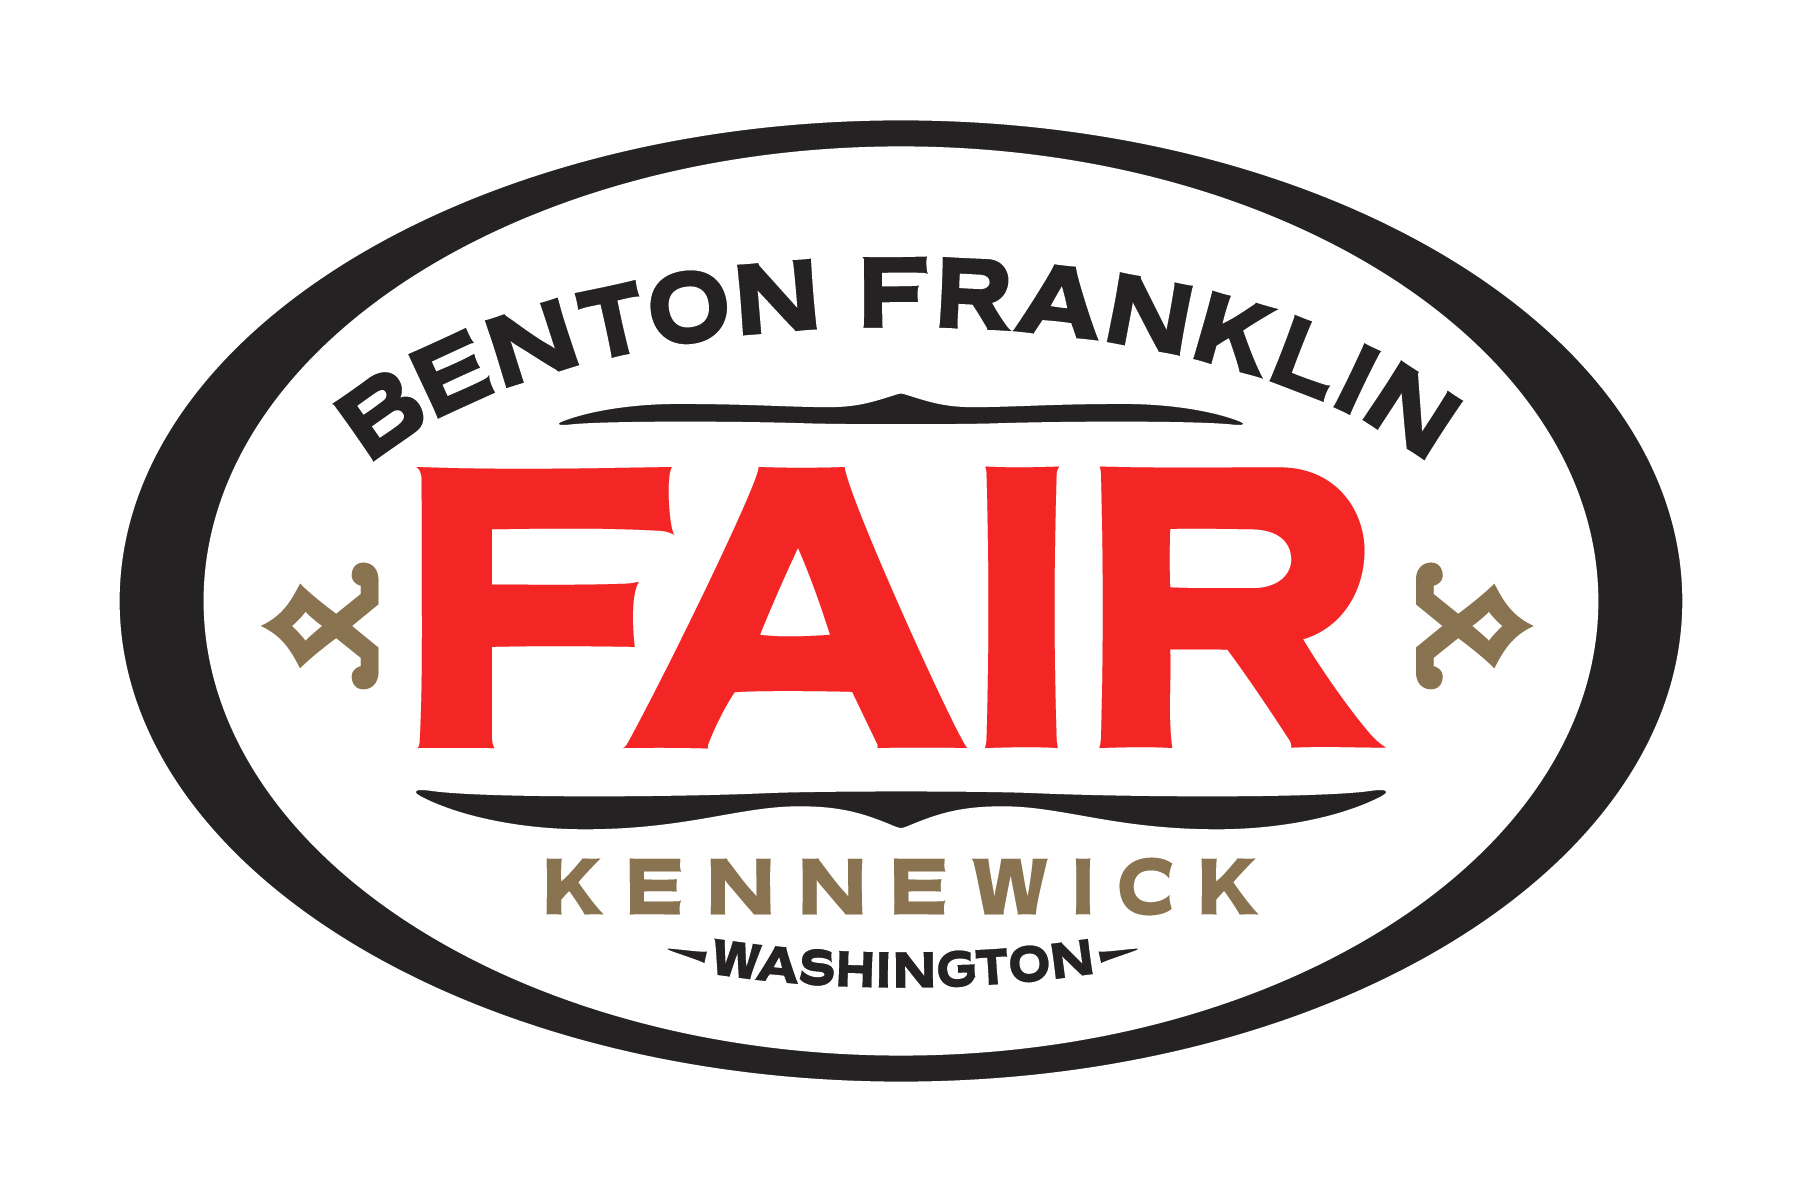 Benton Franklin Fair and Rodeo